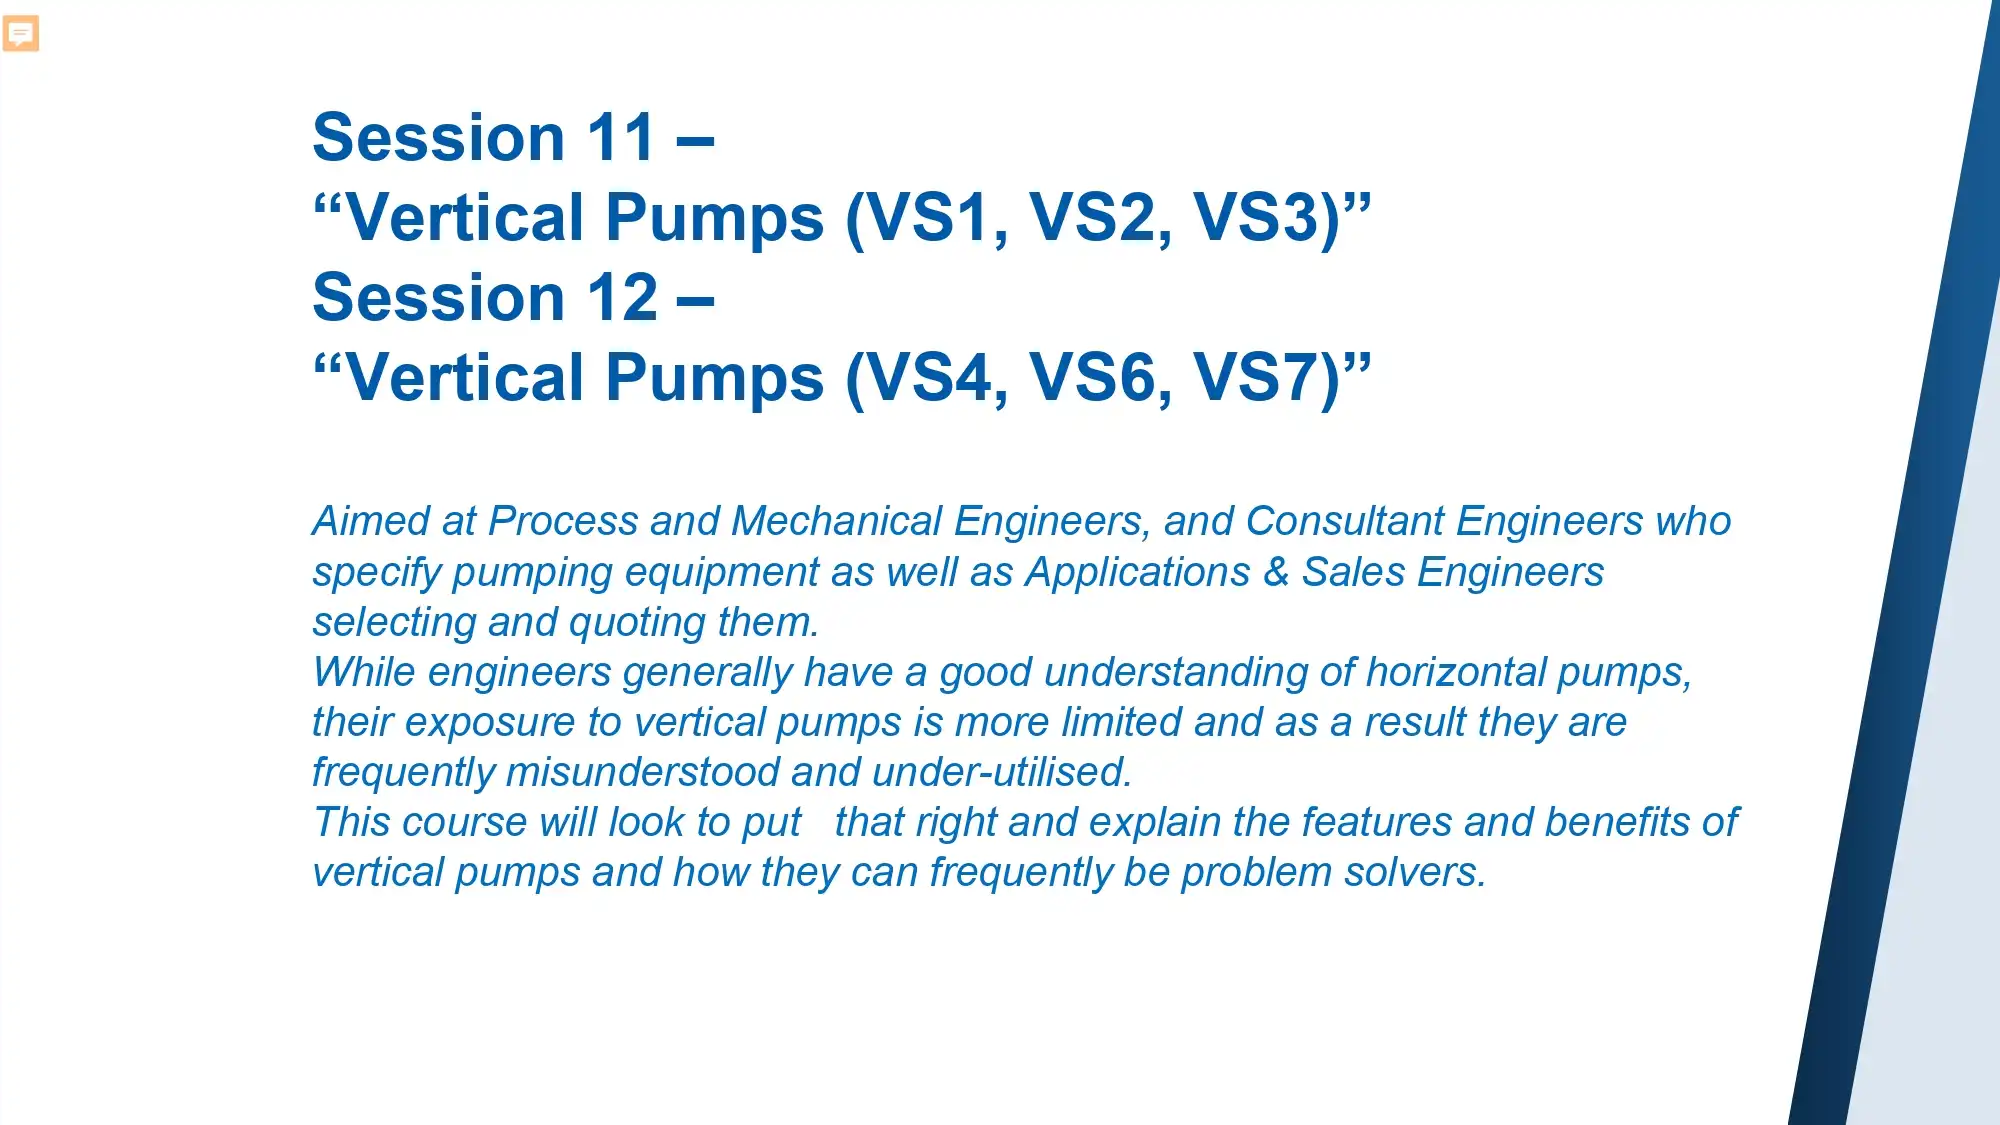 Session 11 –“Vertical Pumps (VS1, VS2, VS3)” Session 12 –“Vertical Pumps (VS4, VS6, VS7)”